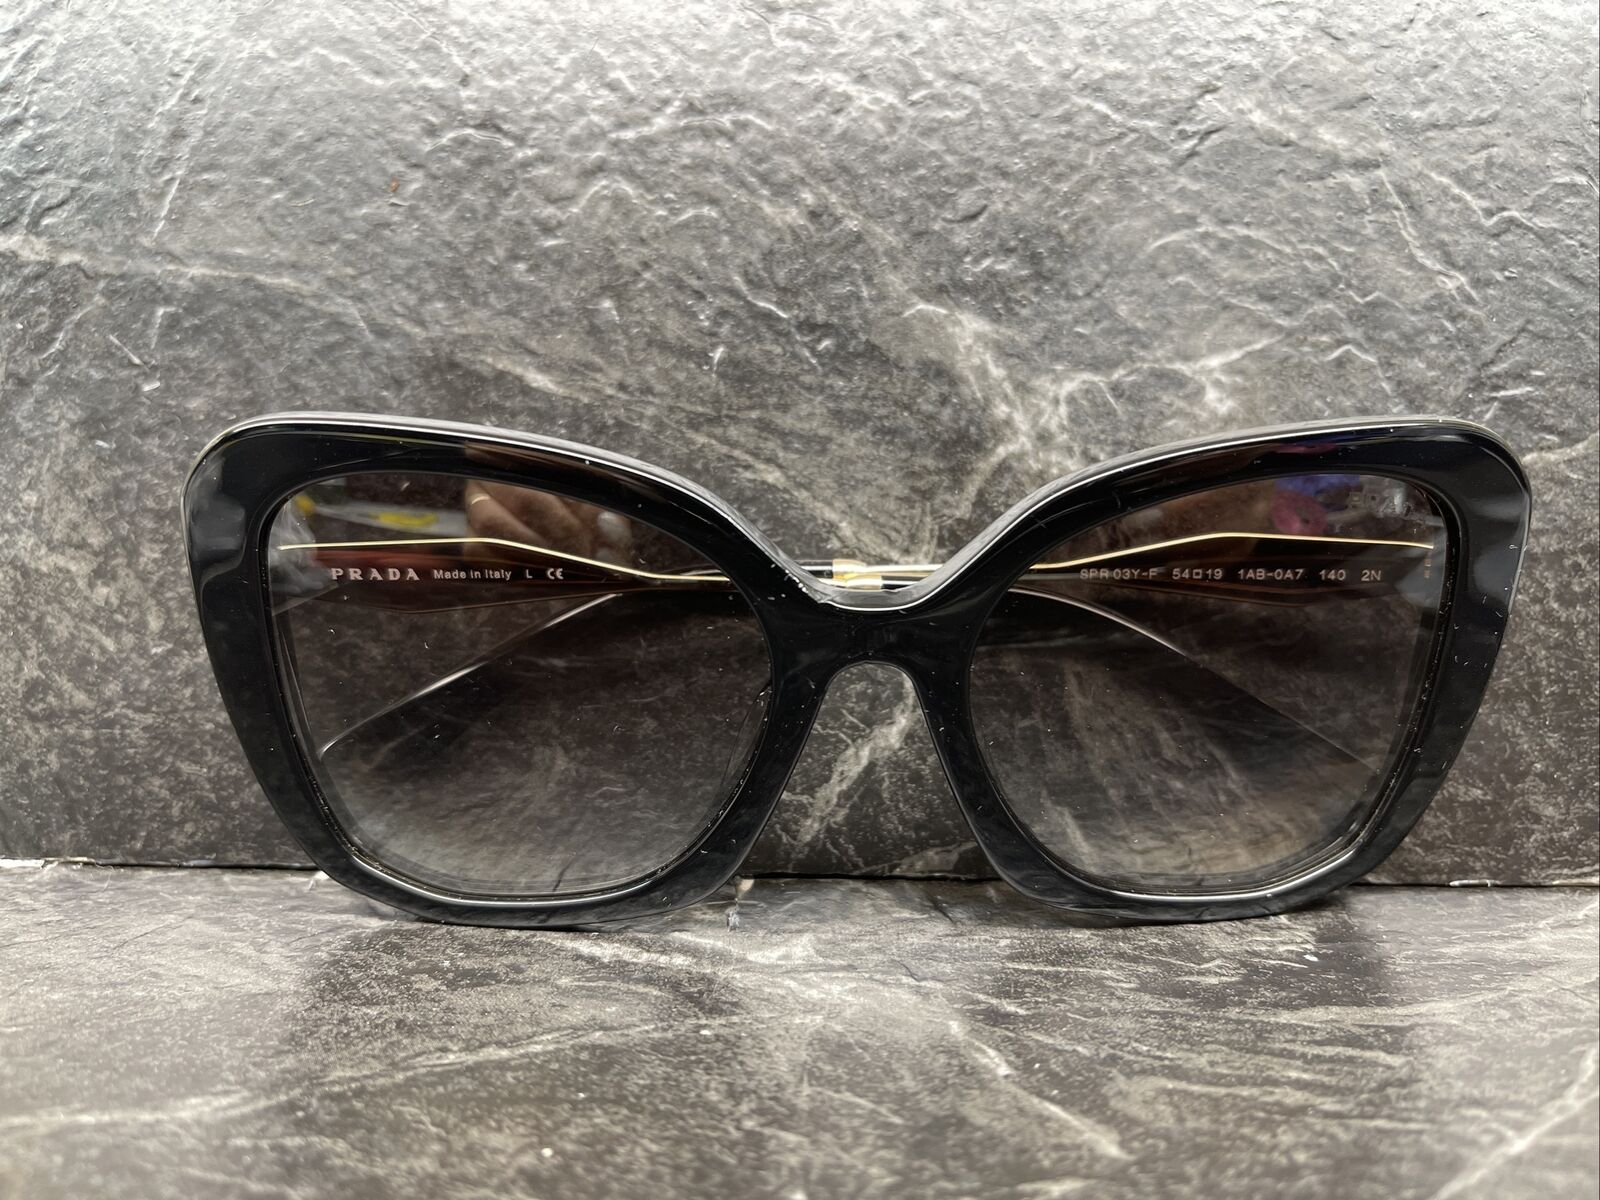 PRADA SPR03Y-F Black/Gold Sunglasses Made in Italy